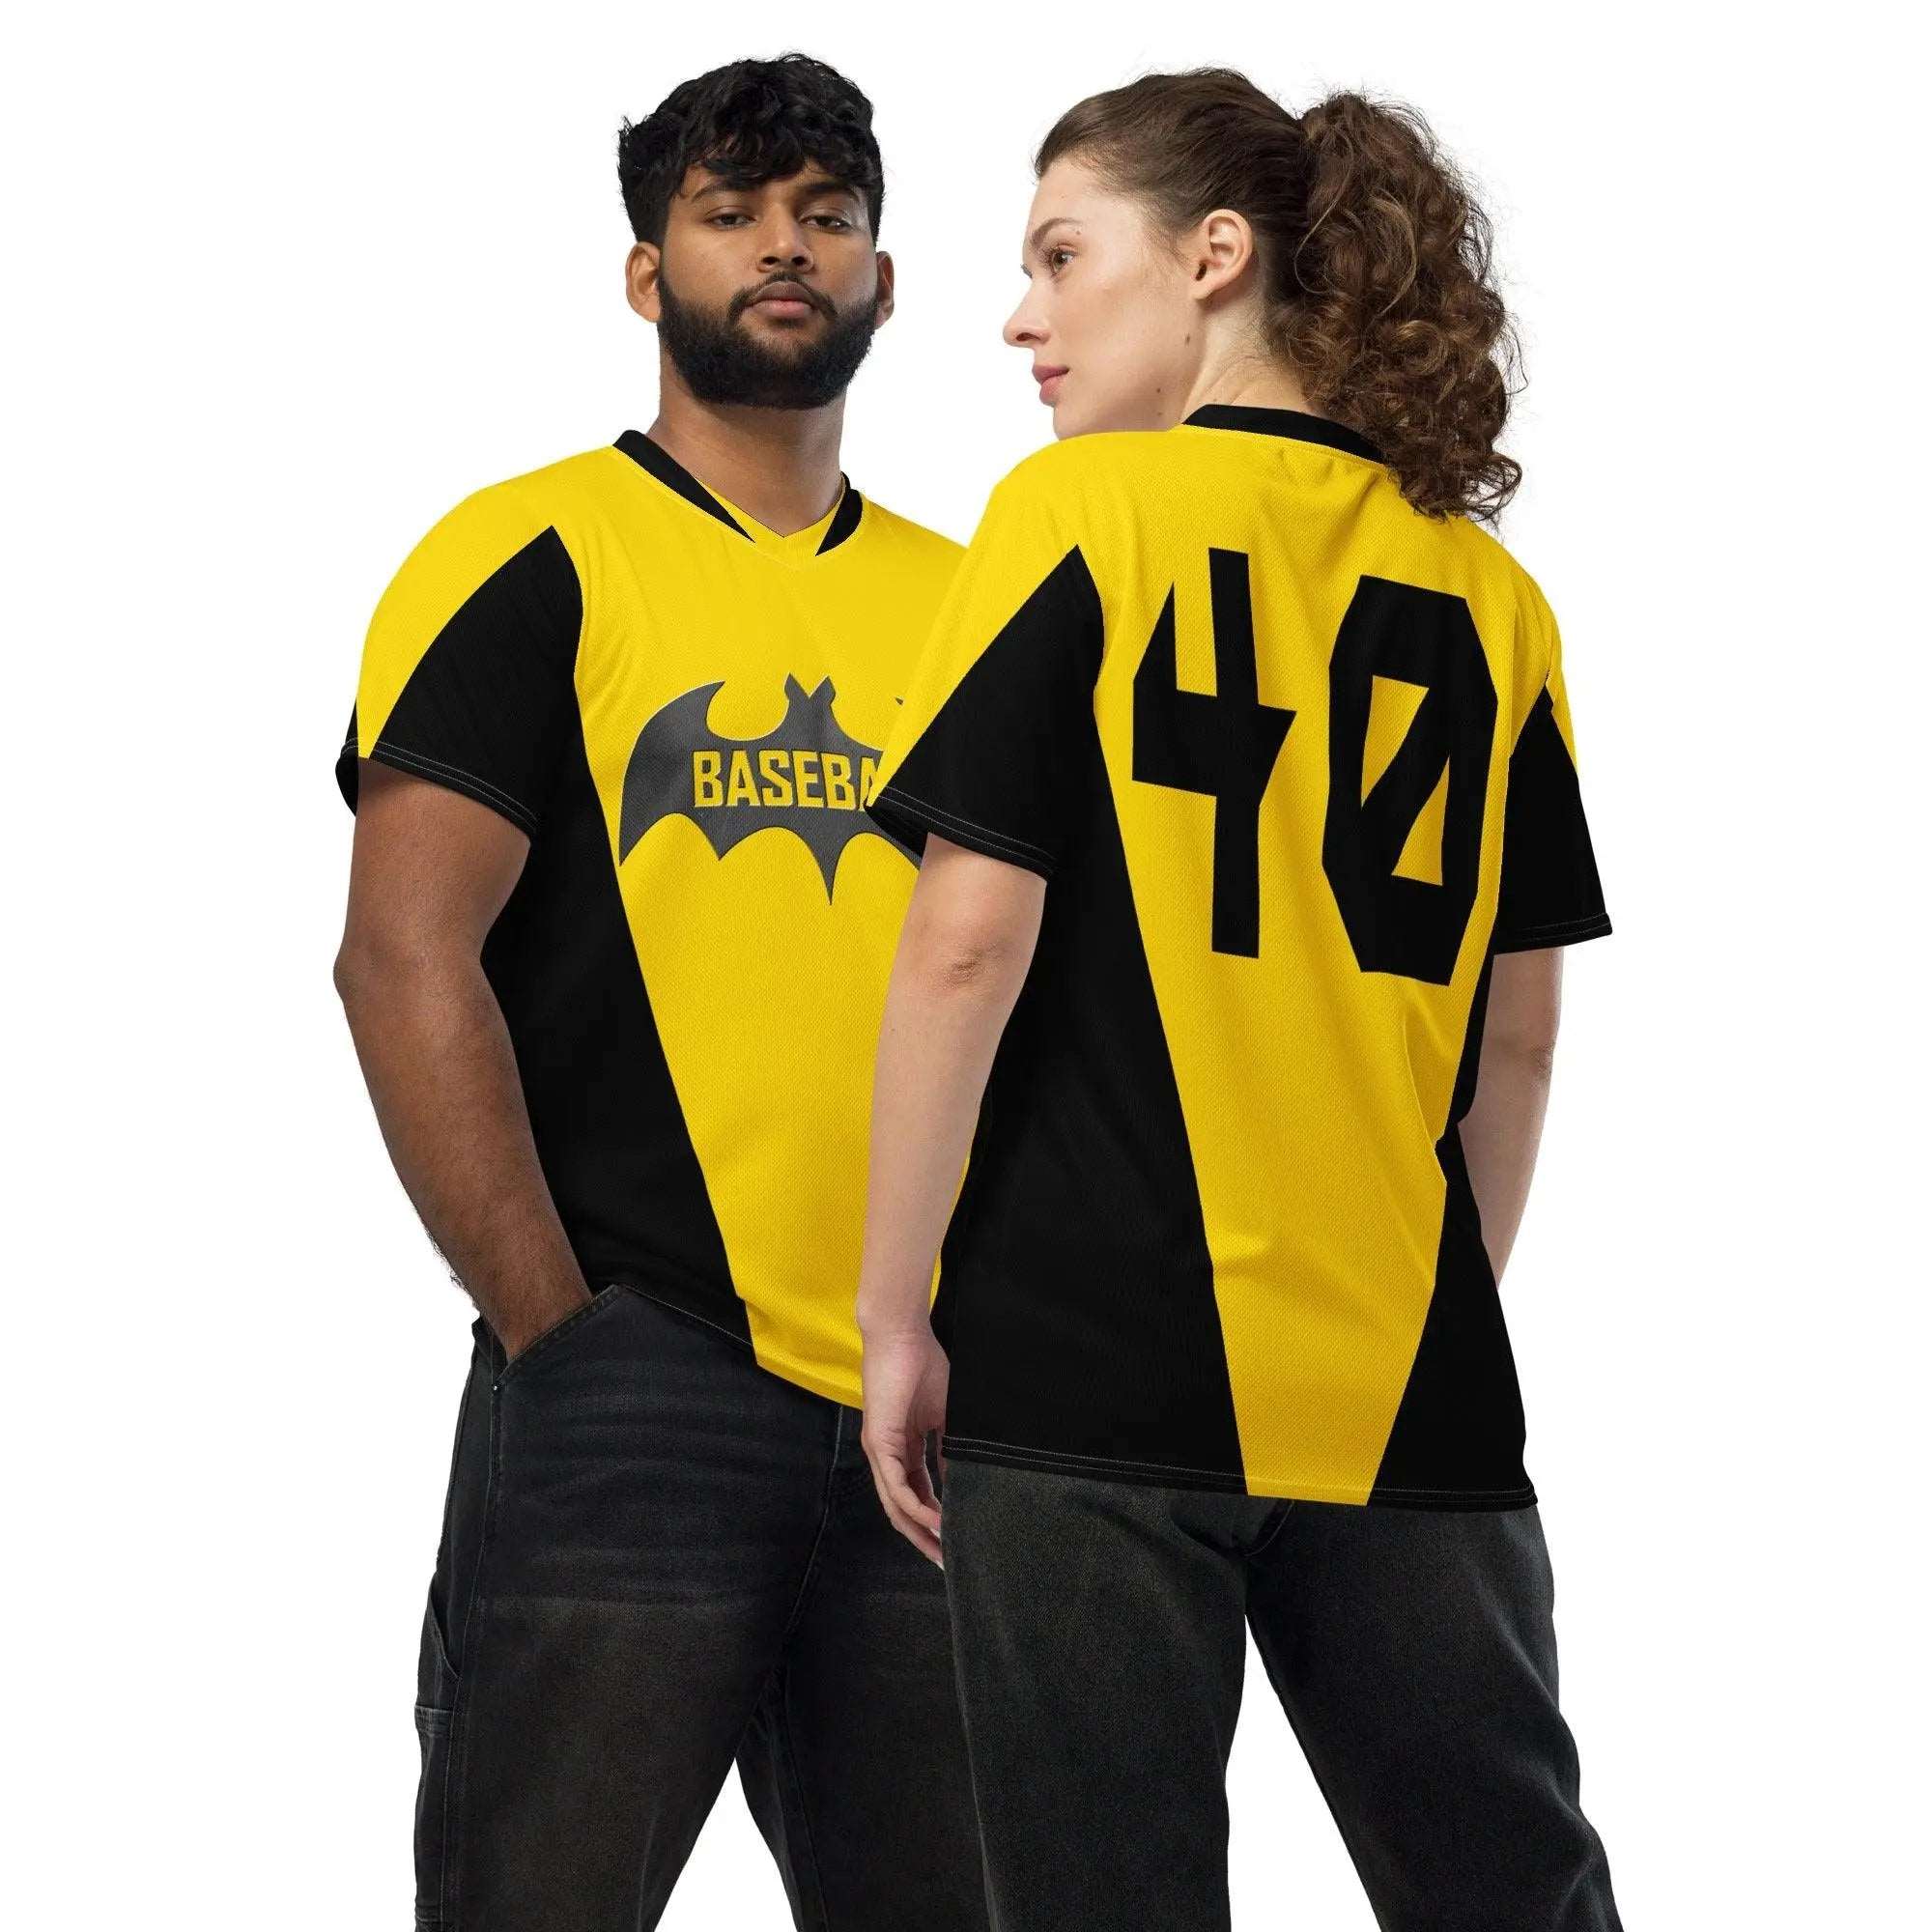 Baseball Bat Recycled unisex sports jersey